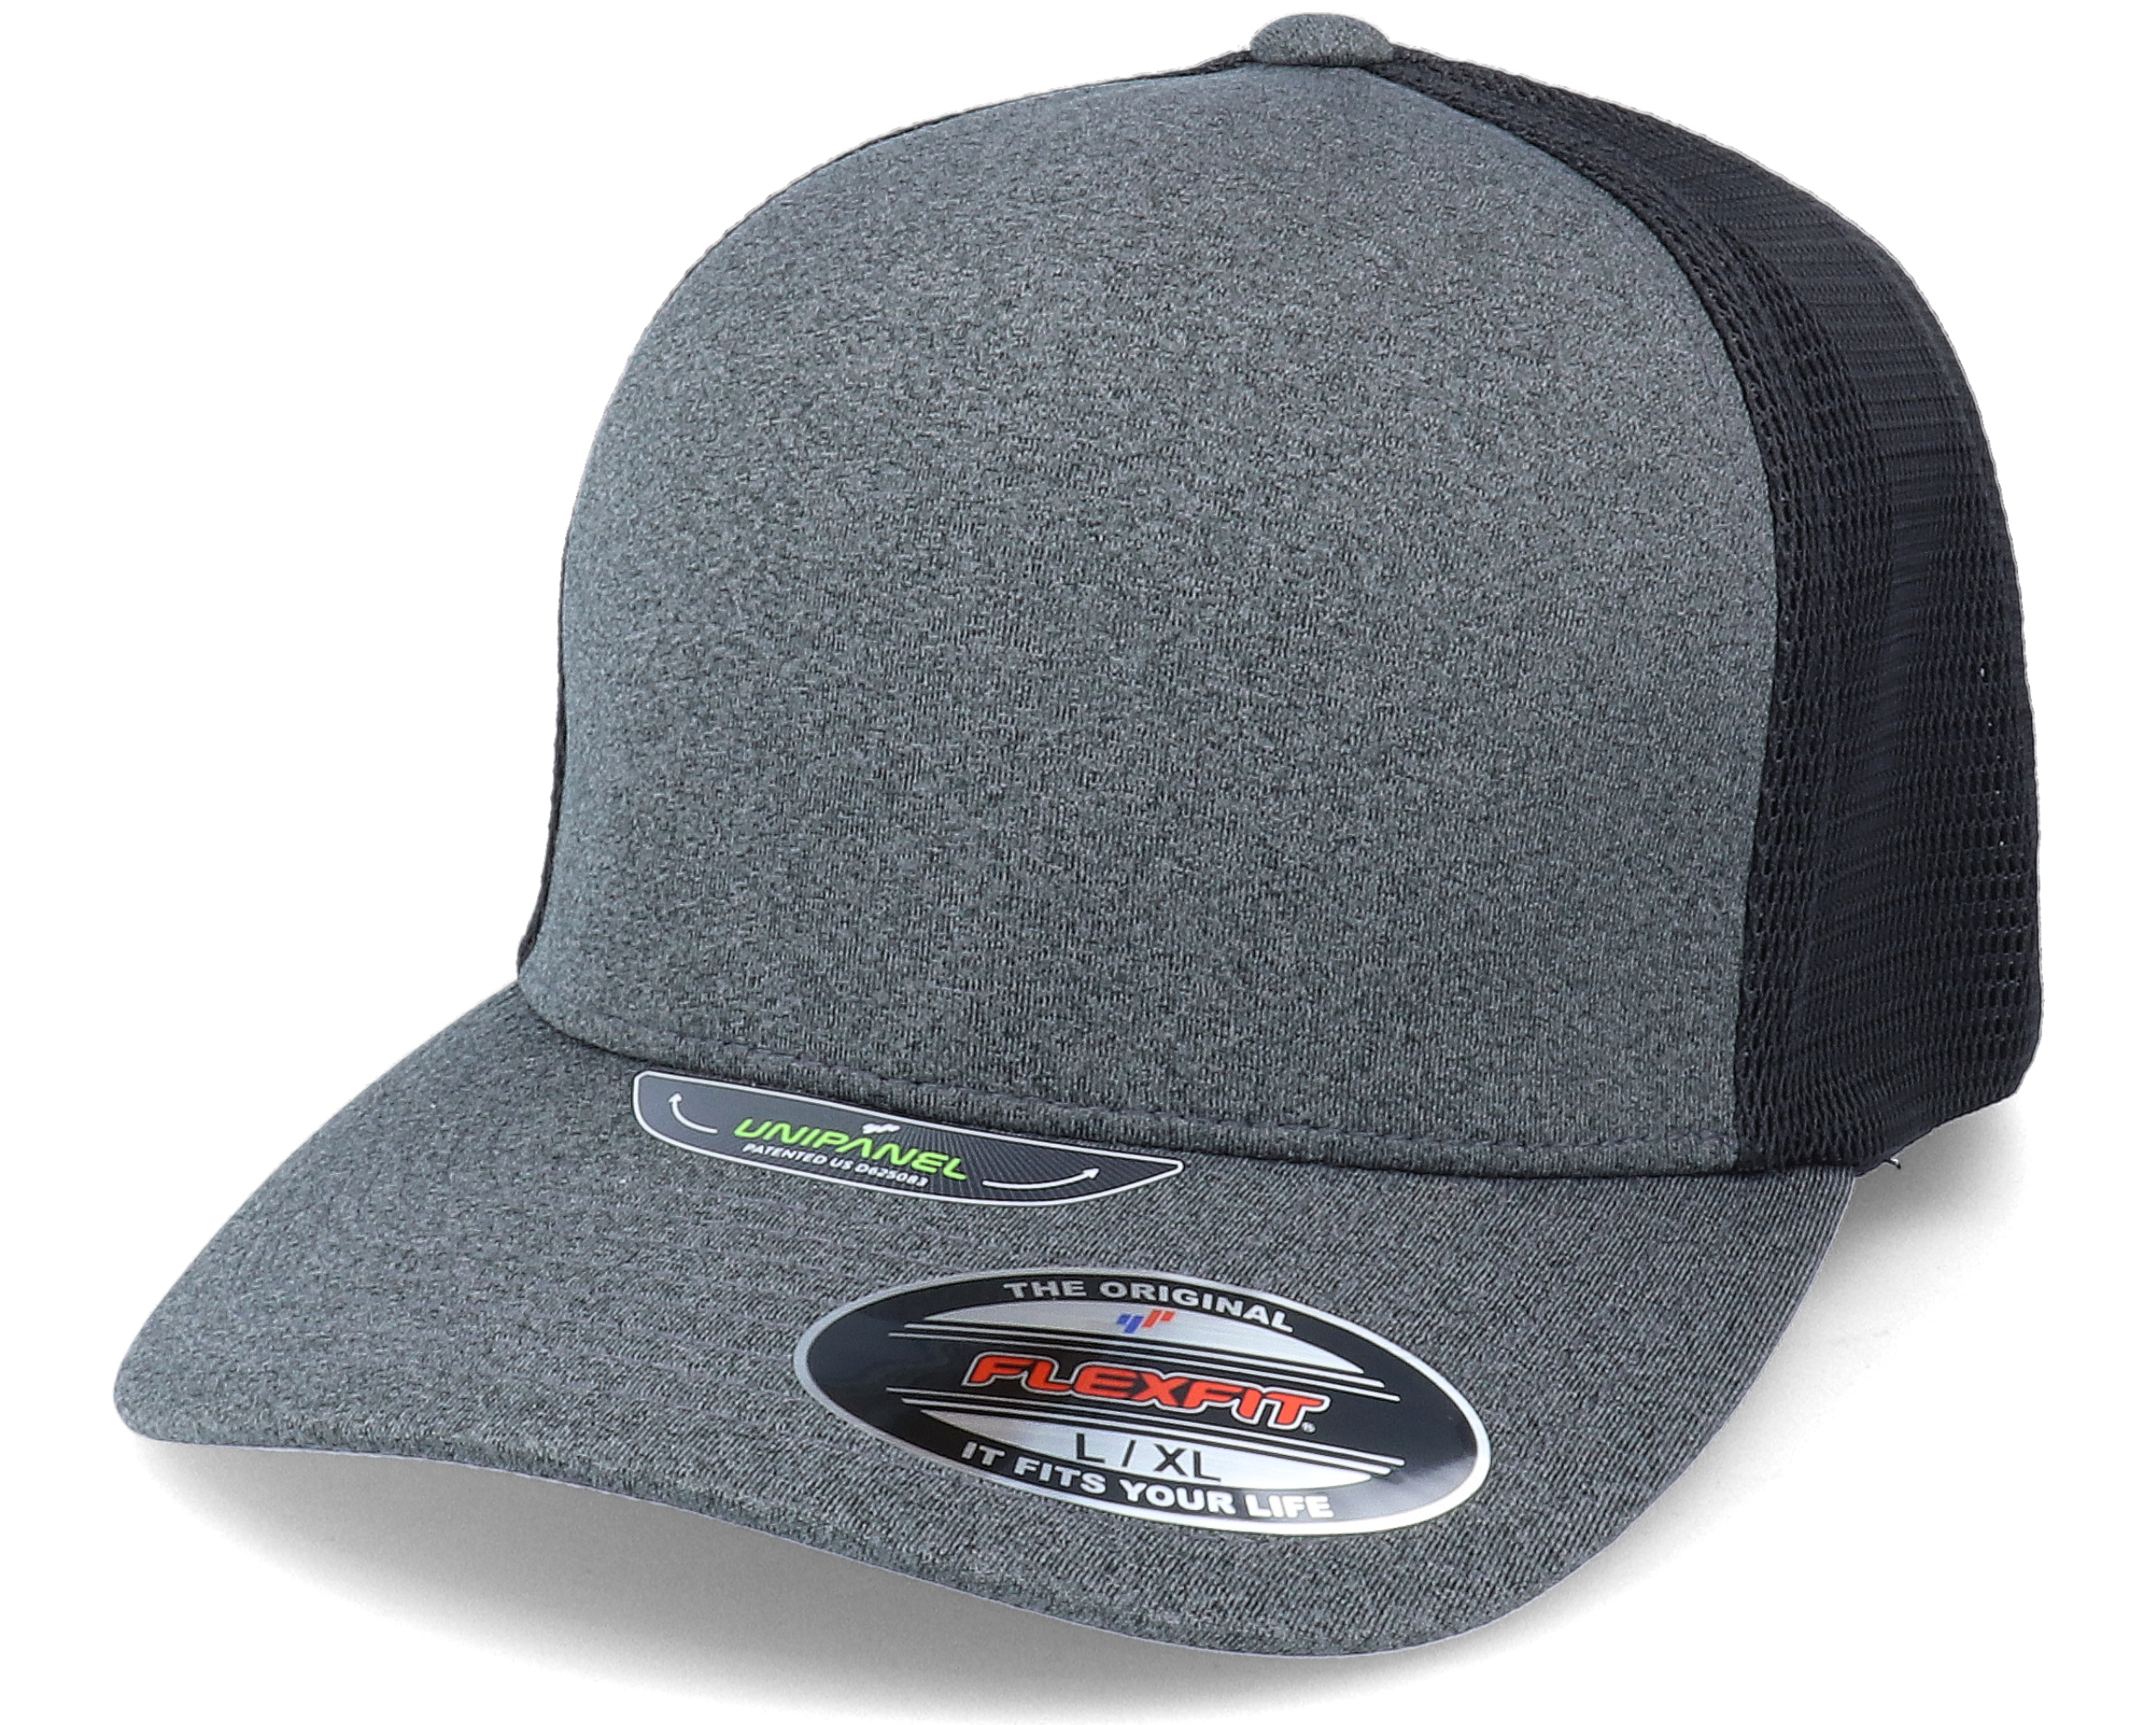 Unipanel Grey/Black Flexfit Flexfit Trucker - Dark cap